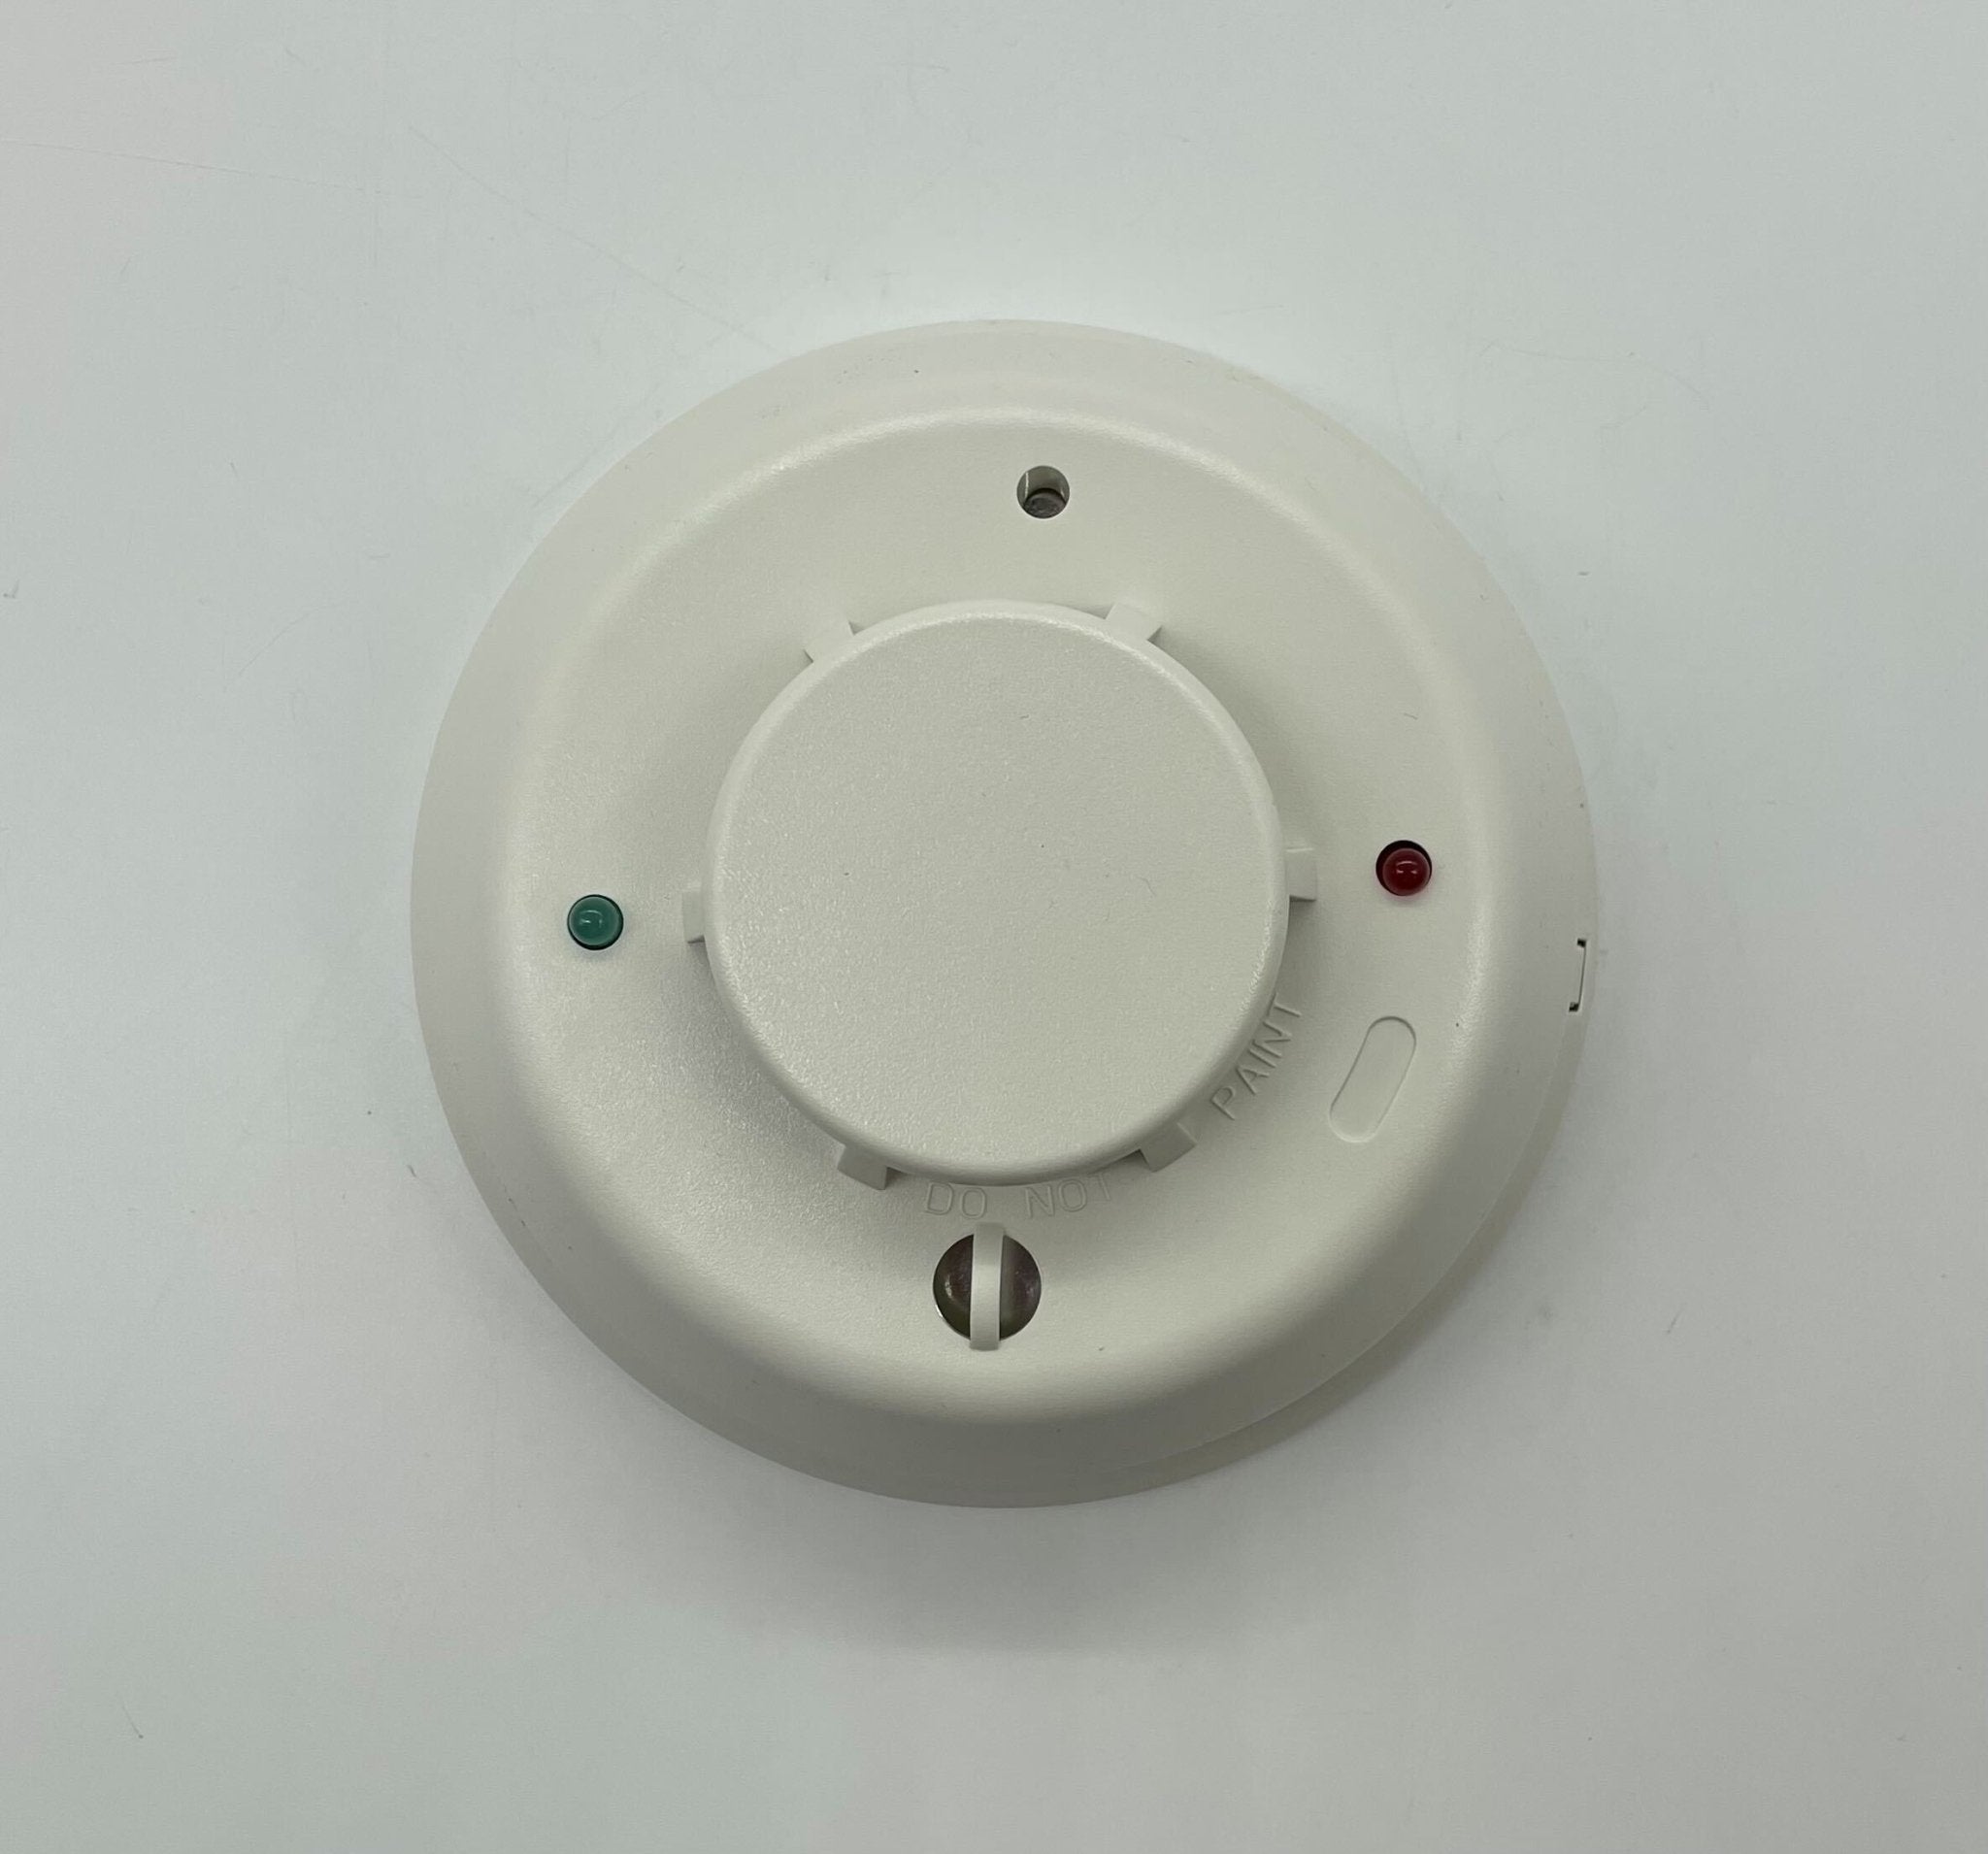 System Sensor 4WTA-B - The Fire Alarm Supplier